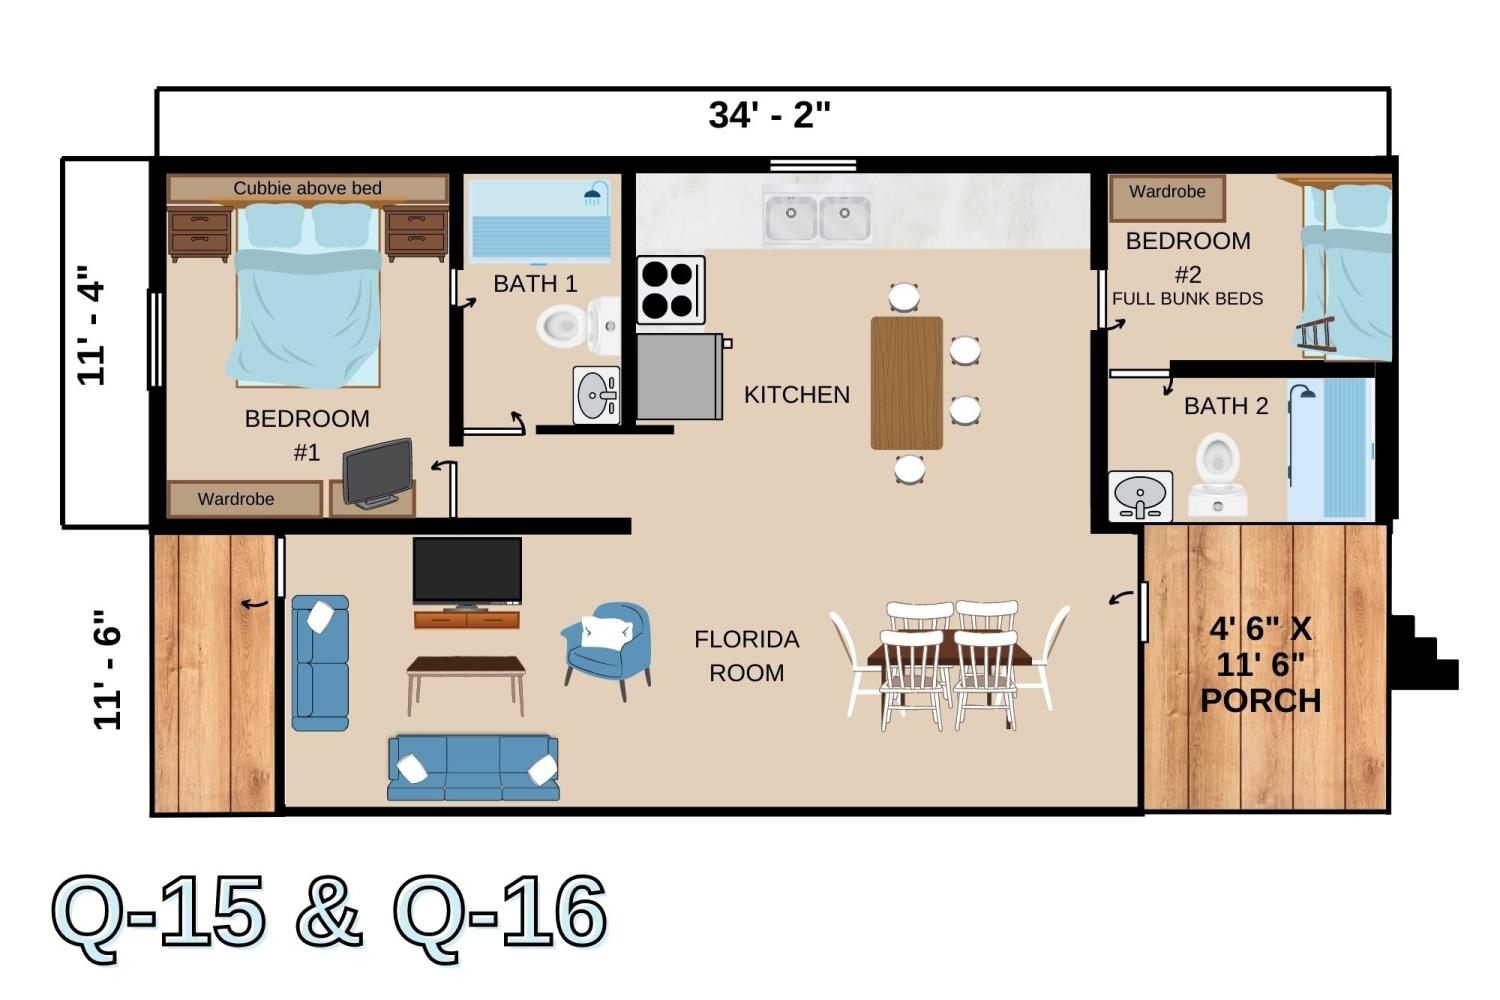 Floorplan for Q15, Q16 - Weekly Rental (Saturday 2 pm to Saturday 10 am)